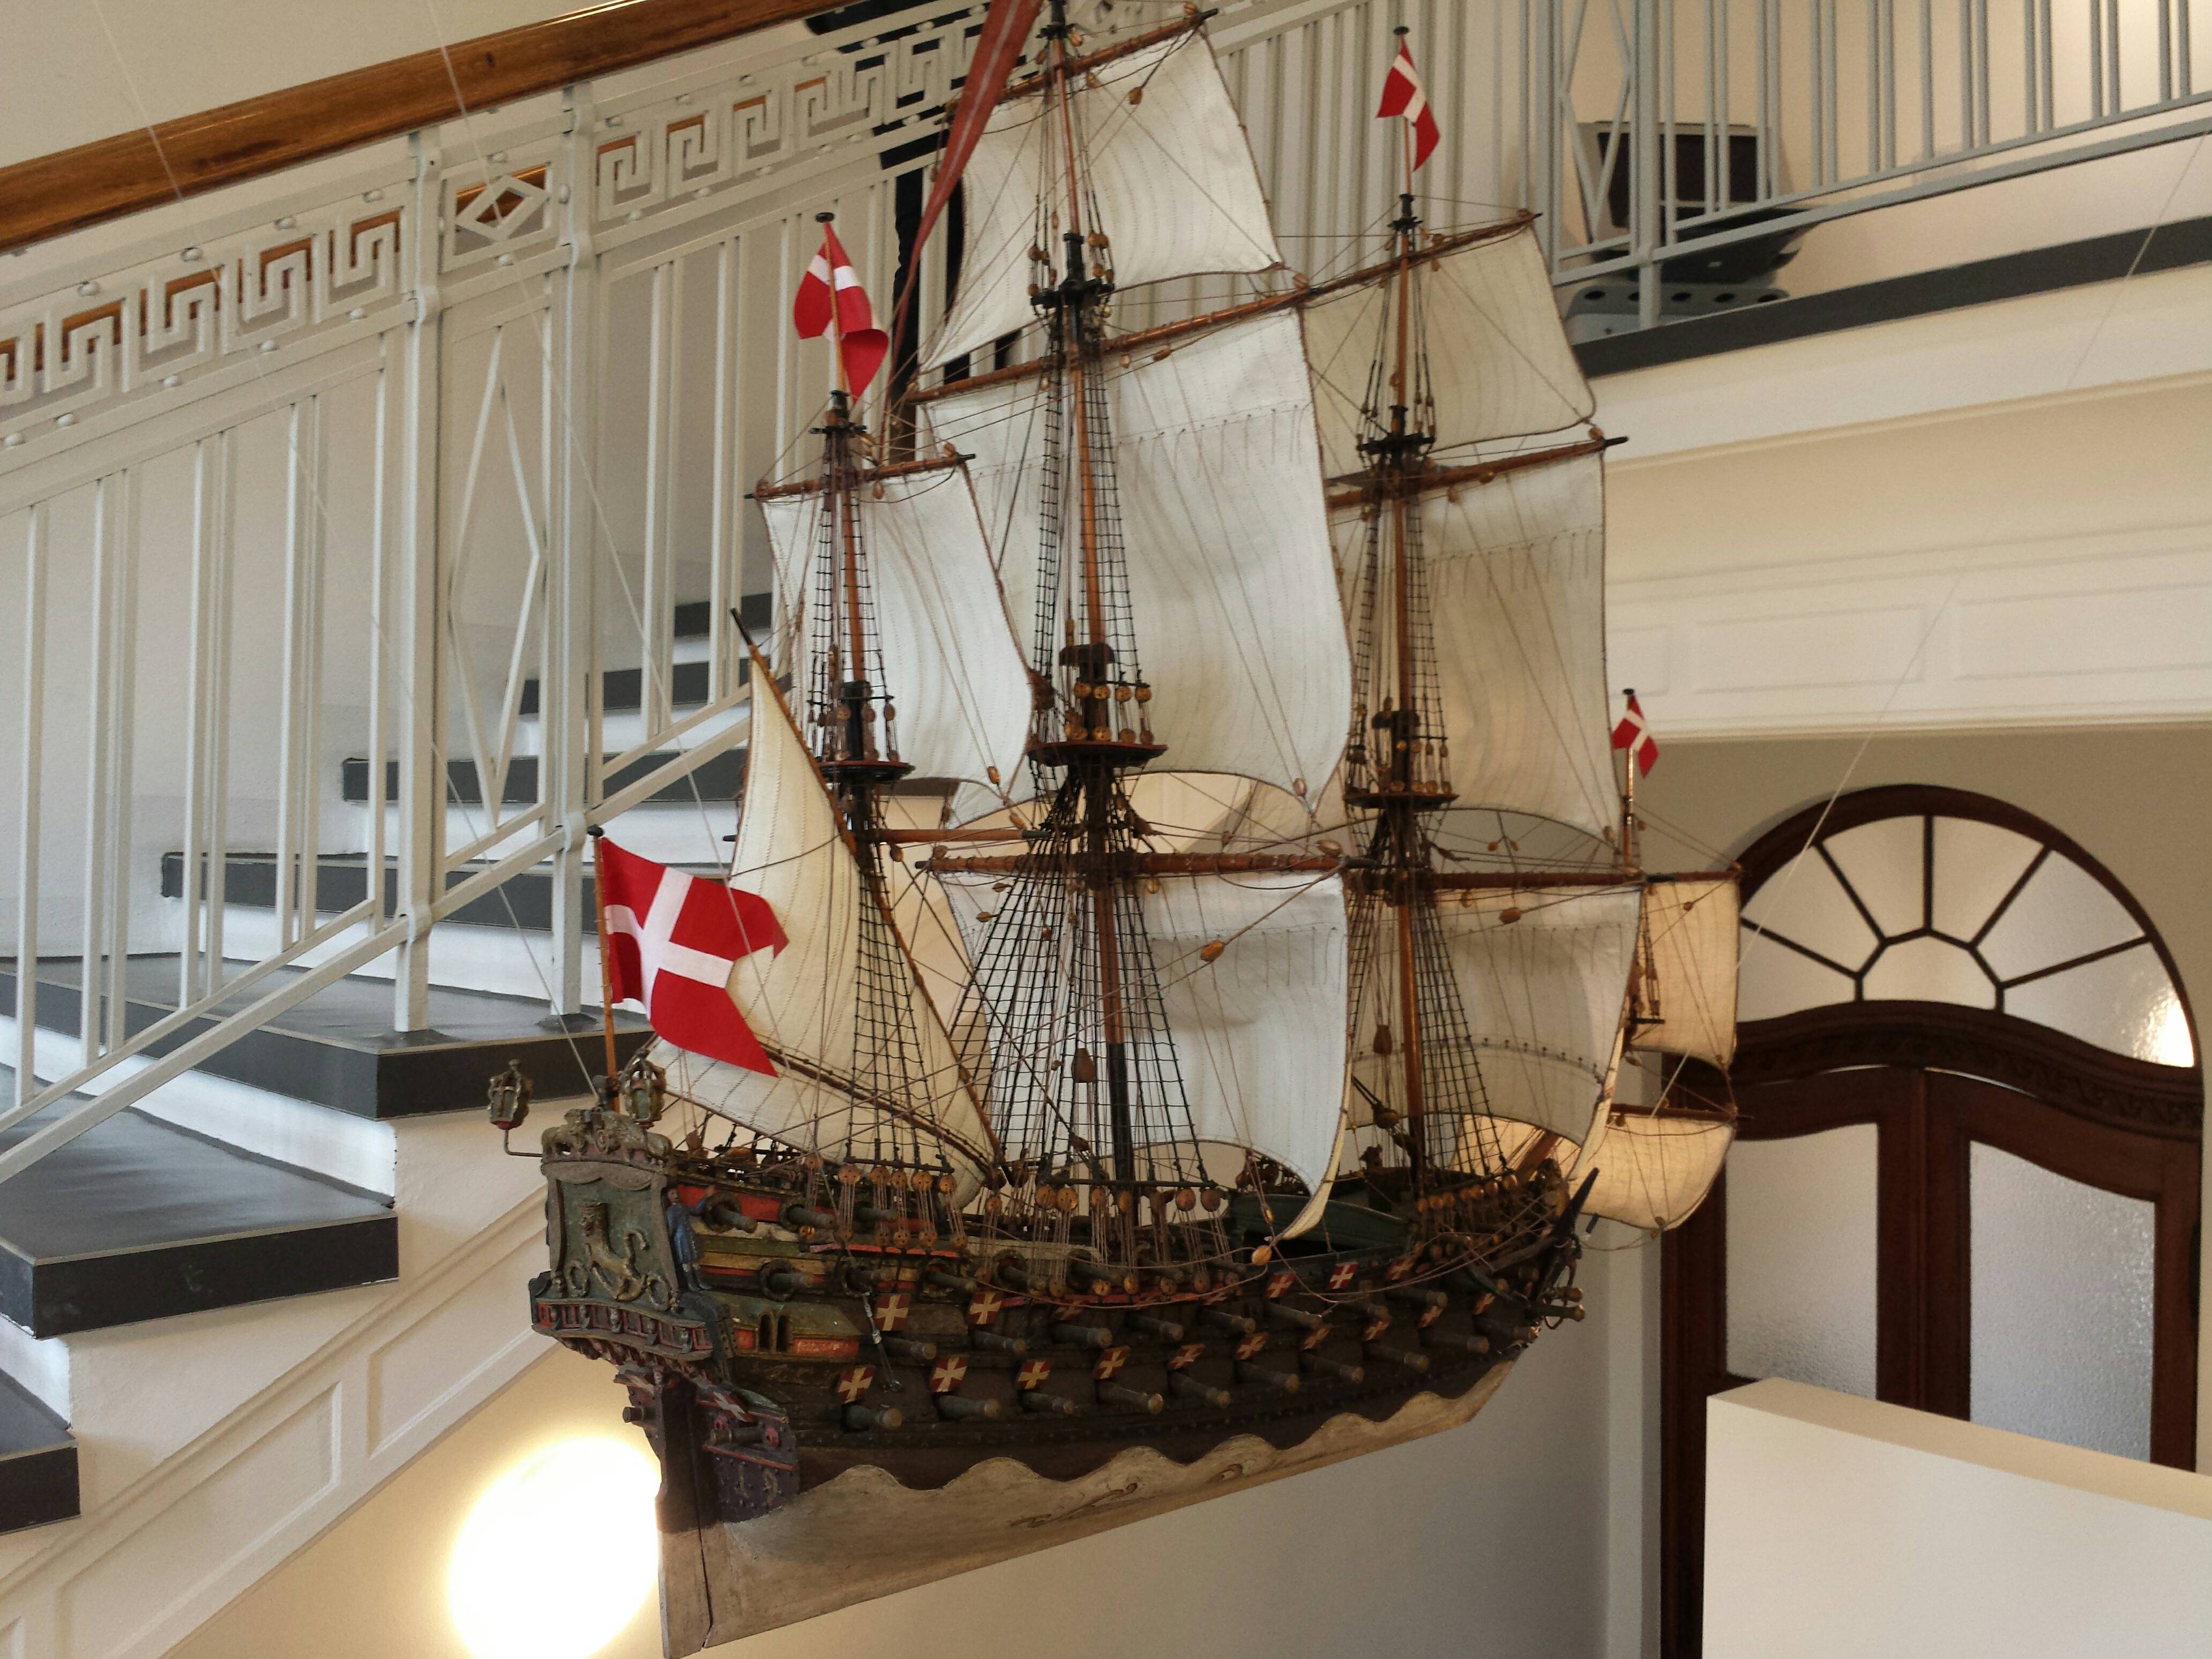 Bild 16 Rum-Museum im Schifffahrtsmuseum in Flensburg